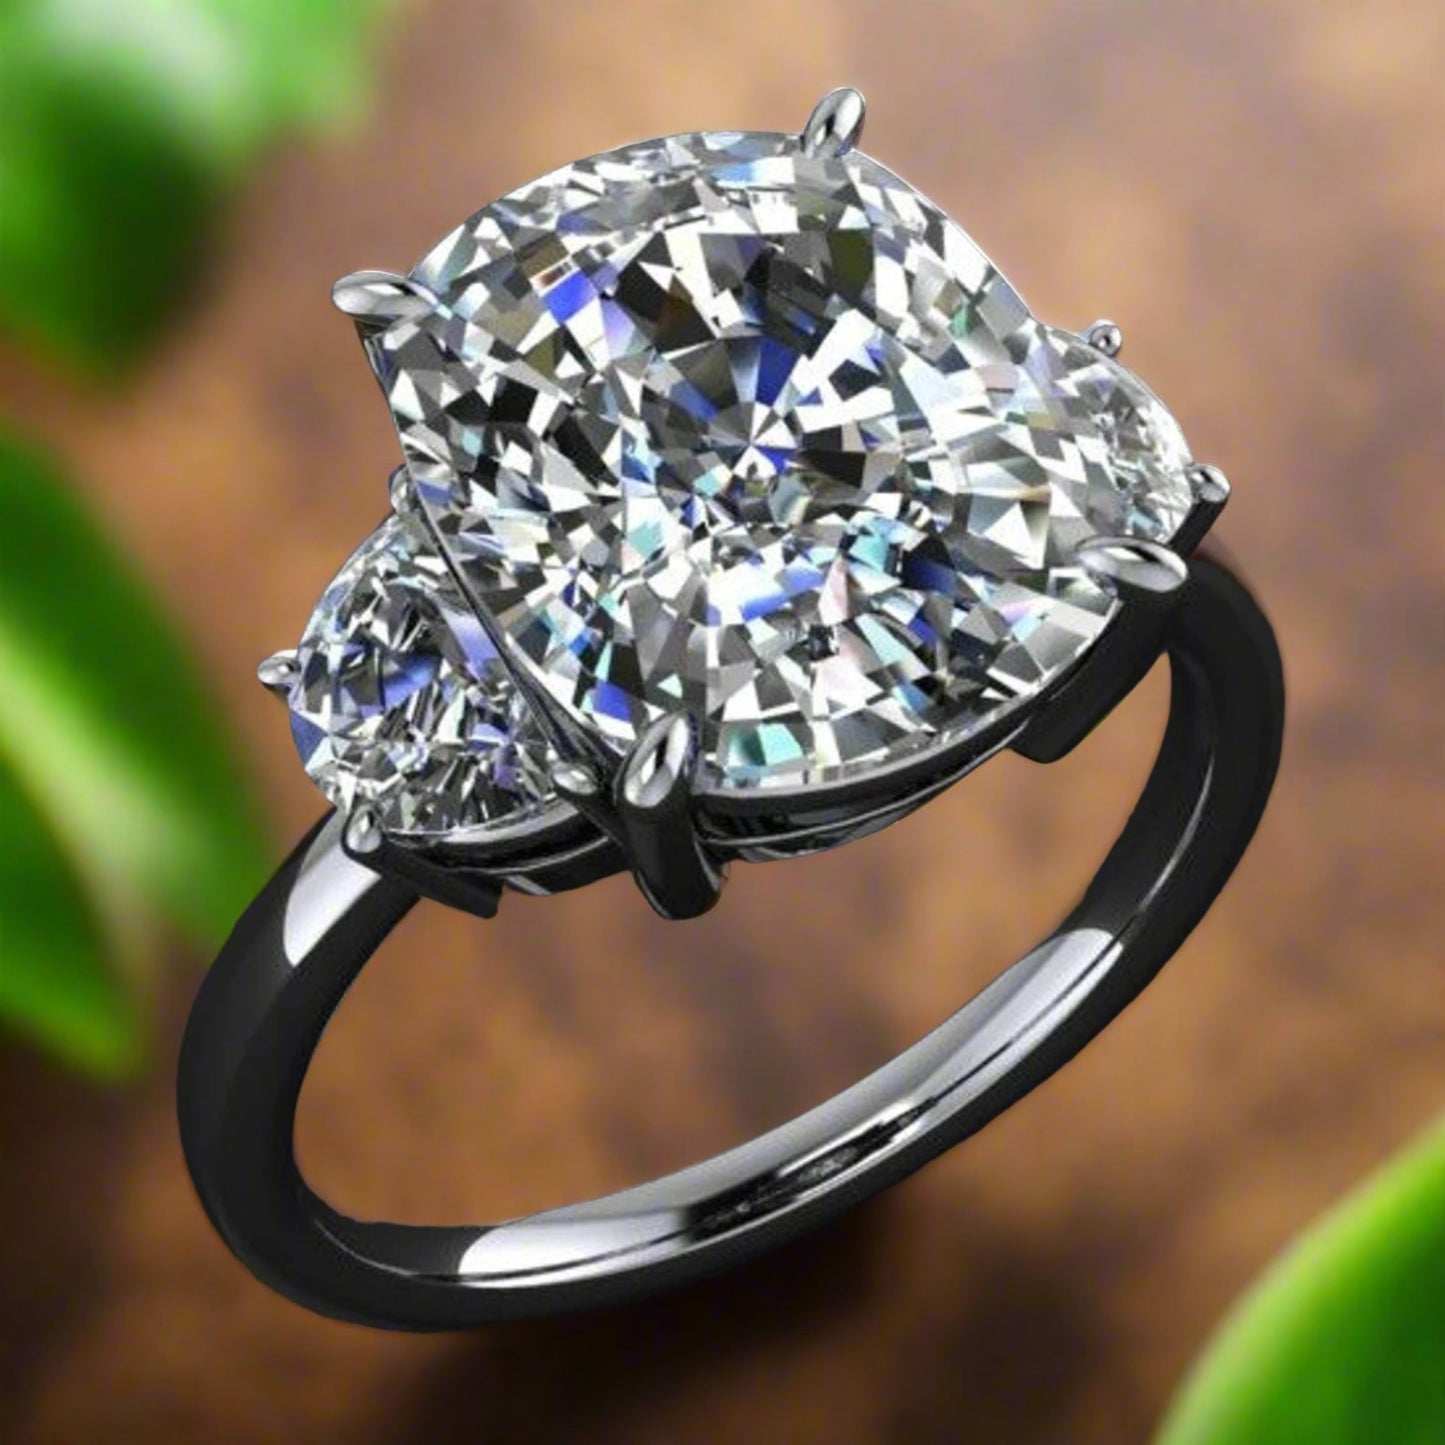 demi ring - 3.5 carat cushion cut moissanite engagement ring, ZAYA moissanite